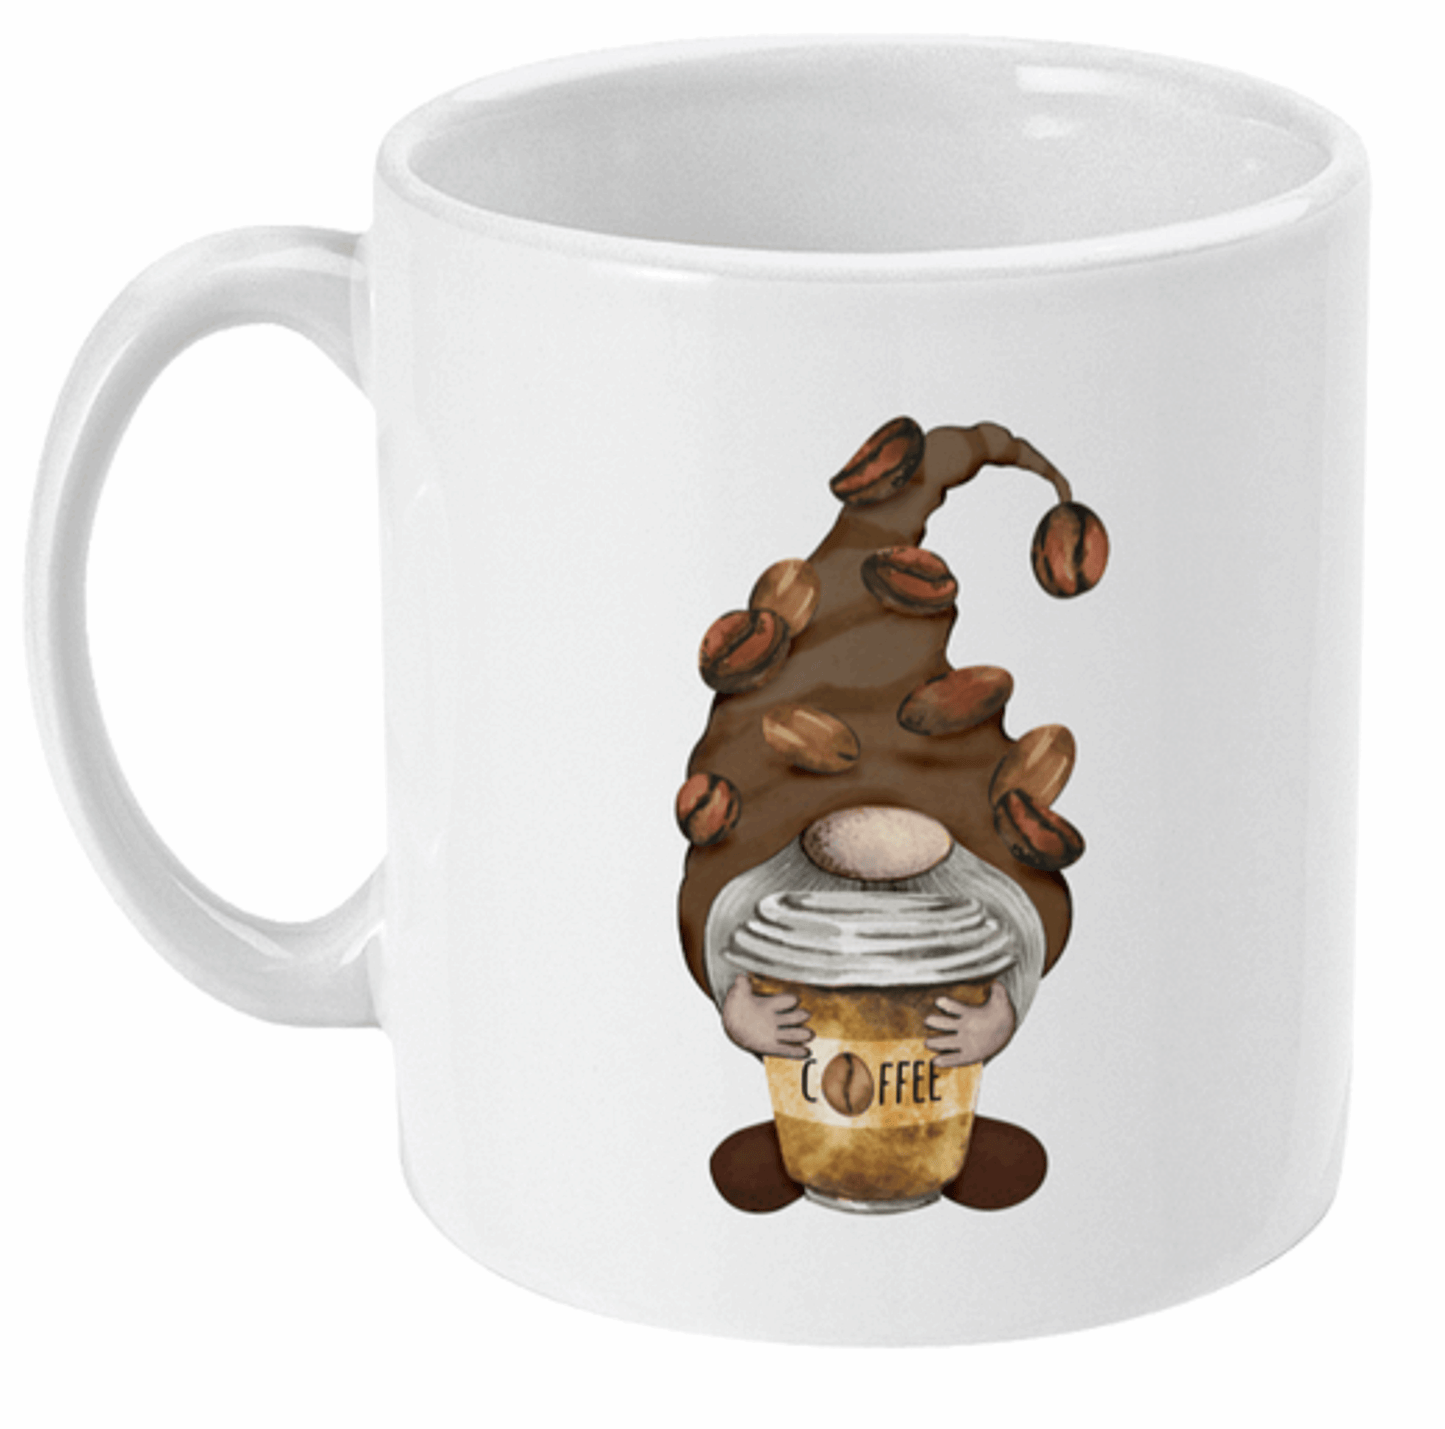  Coffee Gnomes Choice of Two Styles Mug by Free Spirit Accessories sold by Free Spirit Accessories